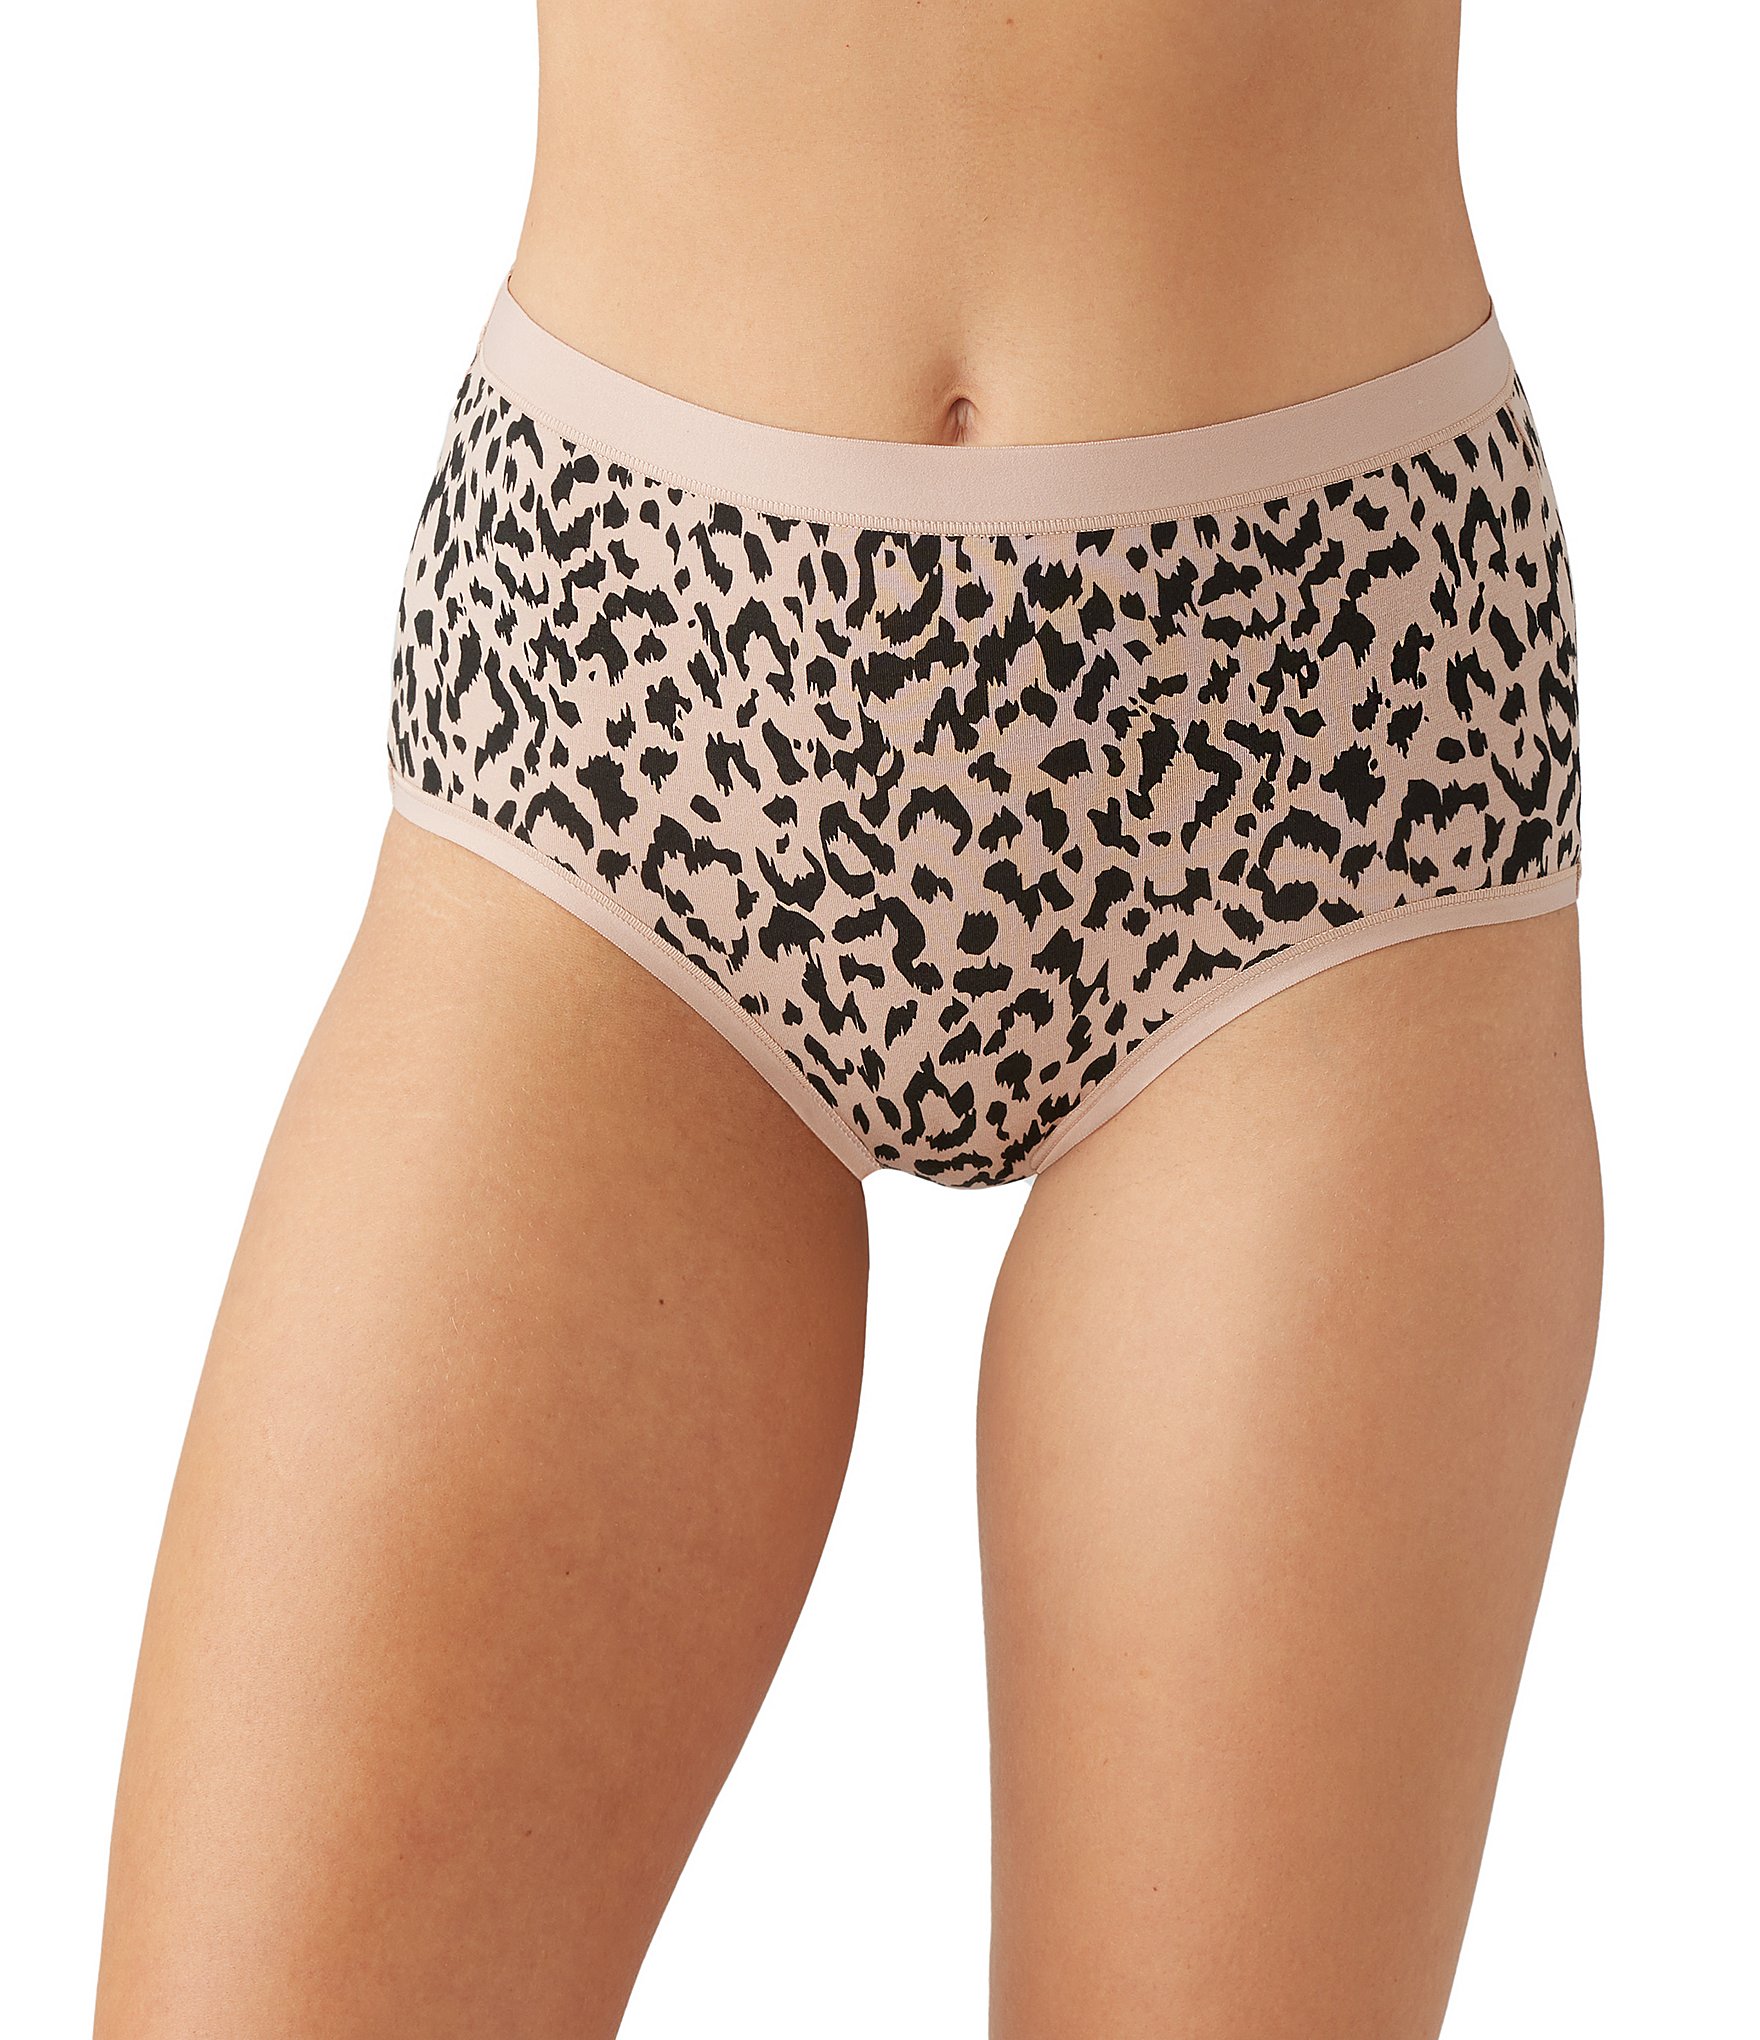 Leopard Print Quick Drying Cotton Seamless Underwear Women Panties